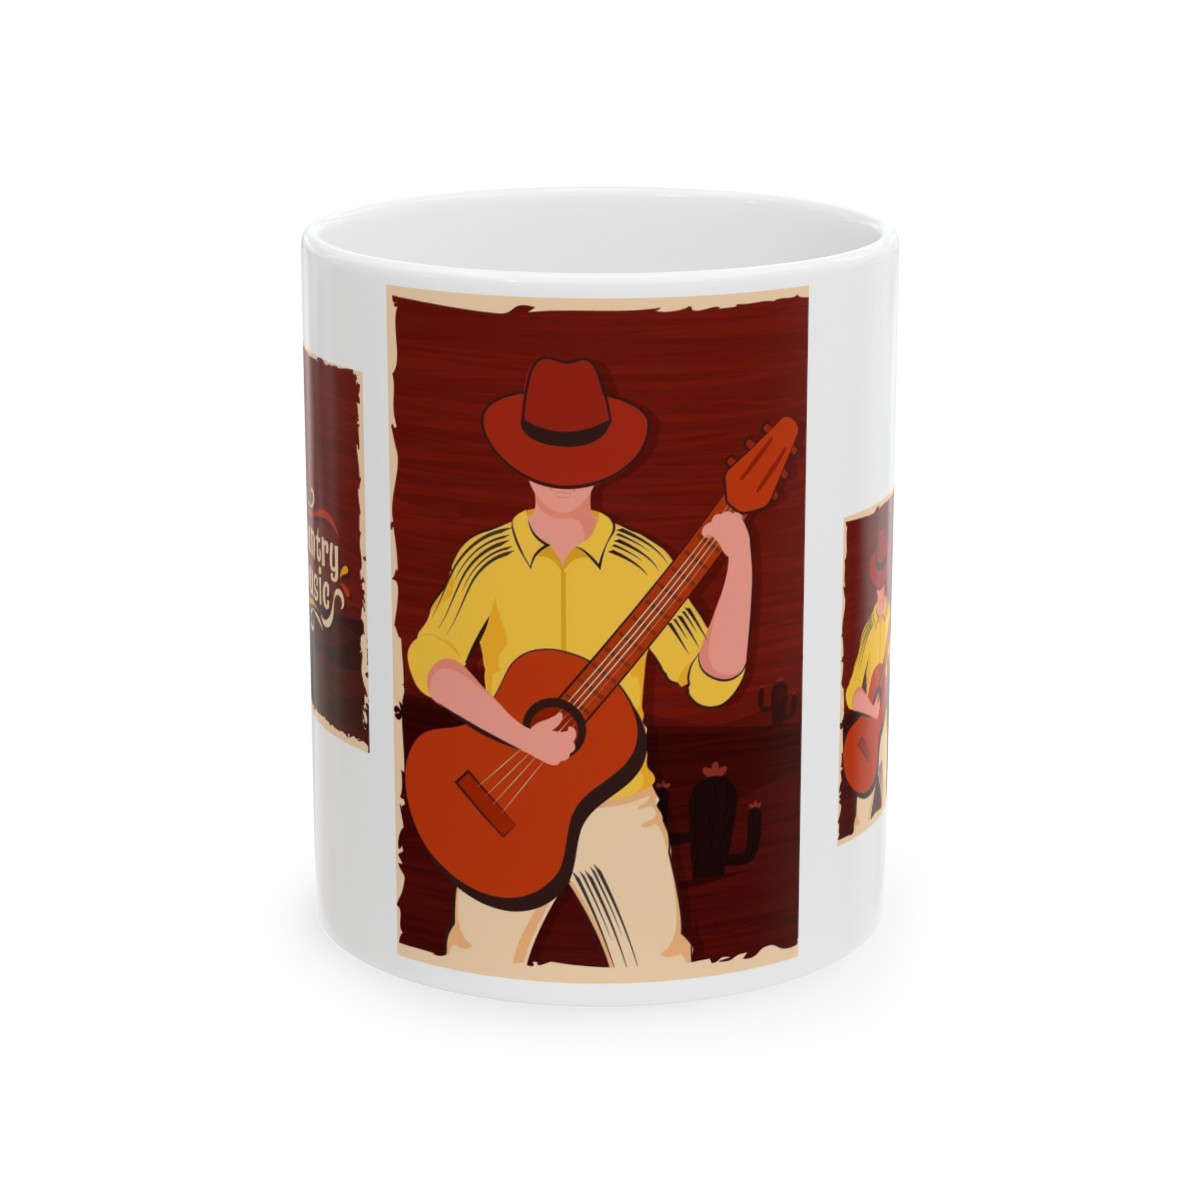 Ceramic Mug Country Music product thumbnail image